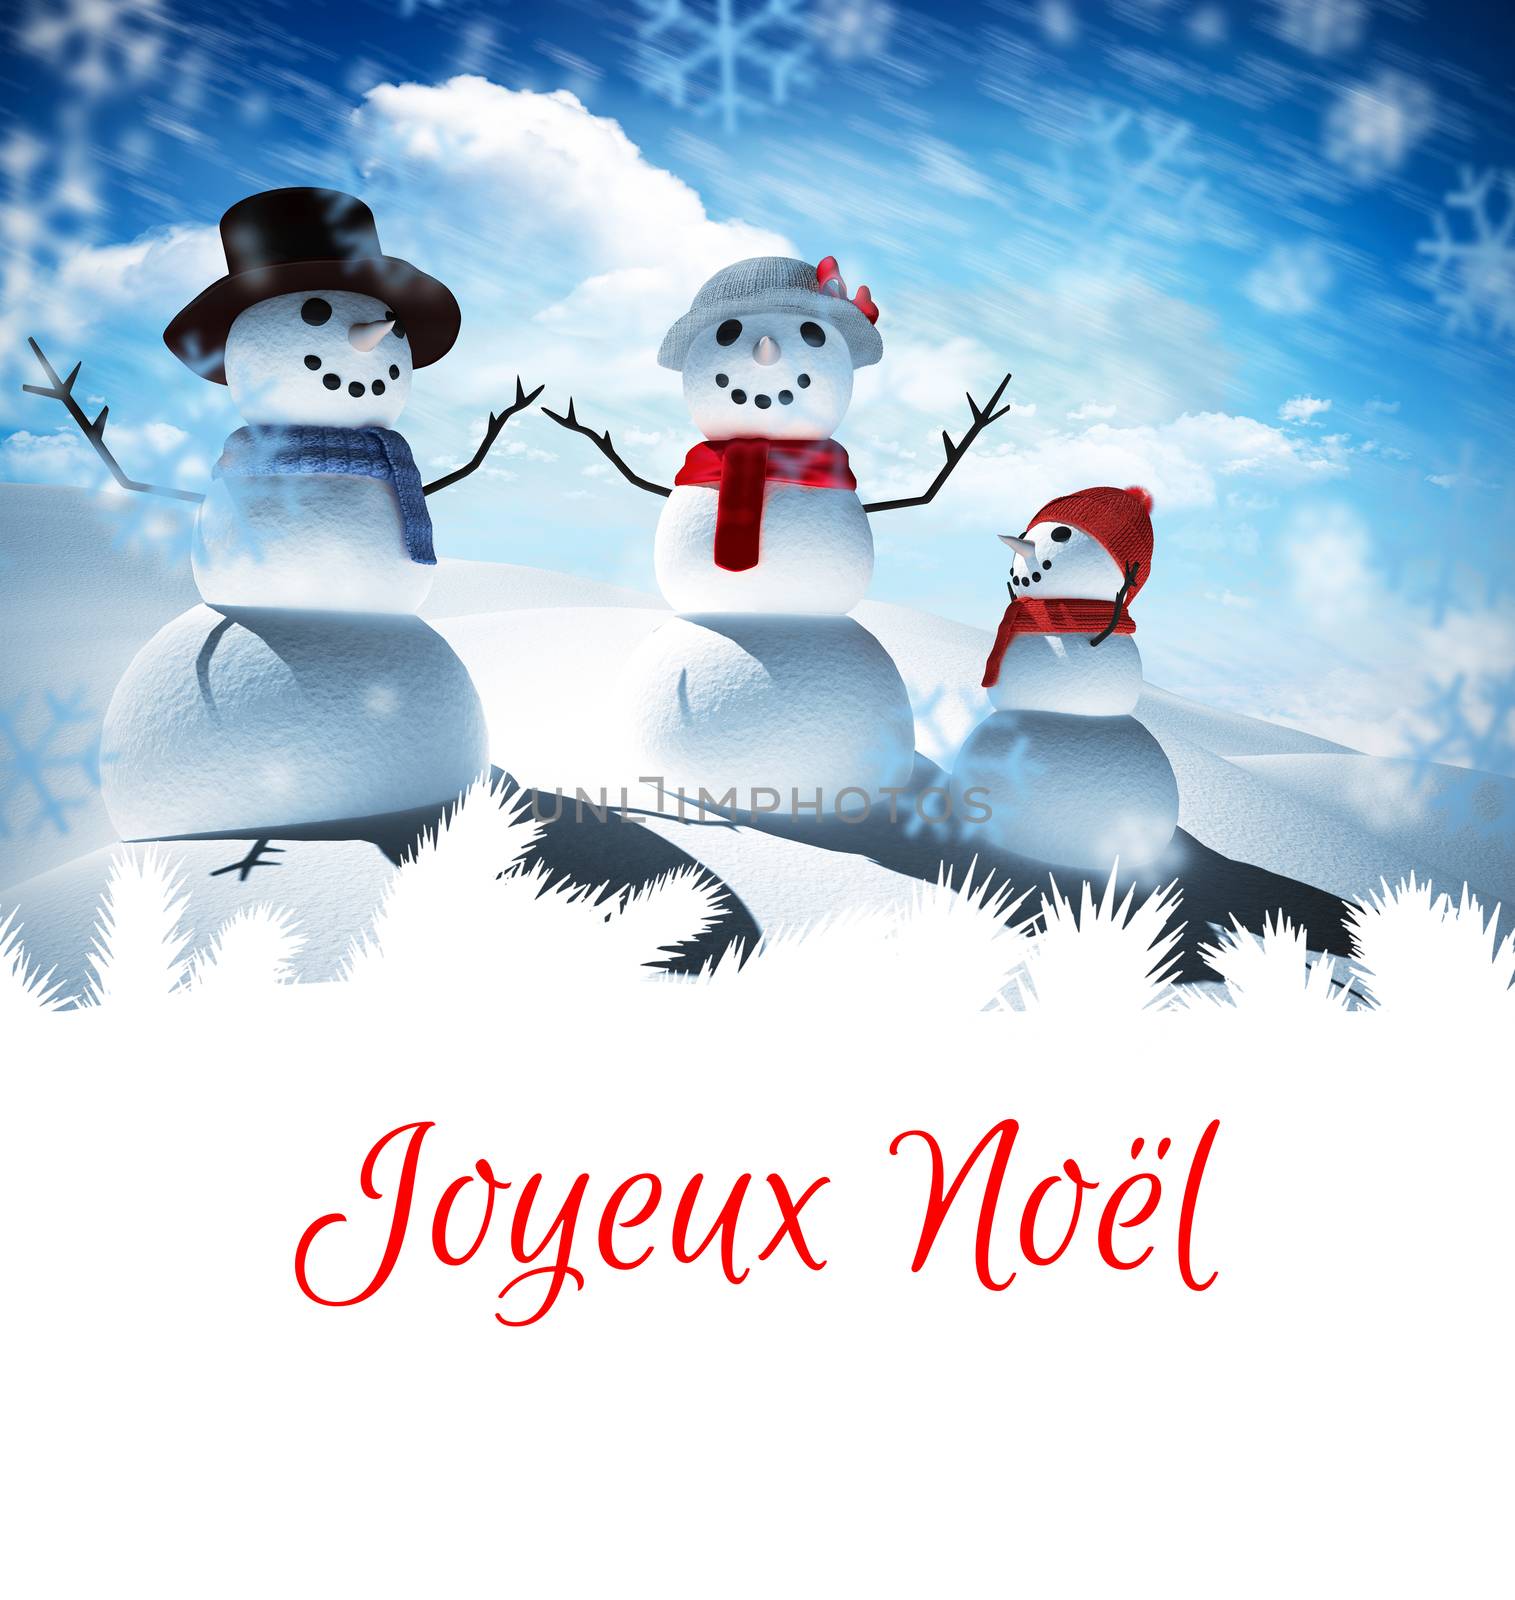 Composite image of joyeux noel by Wavebreakmedia